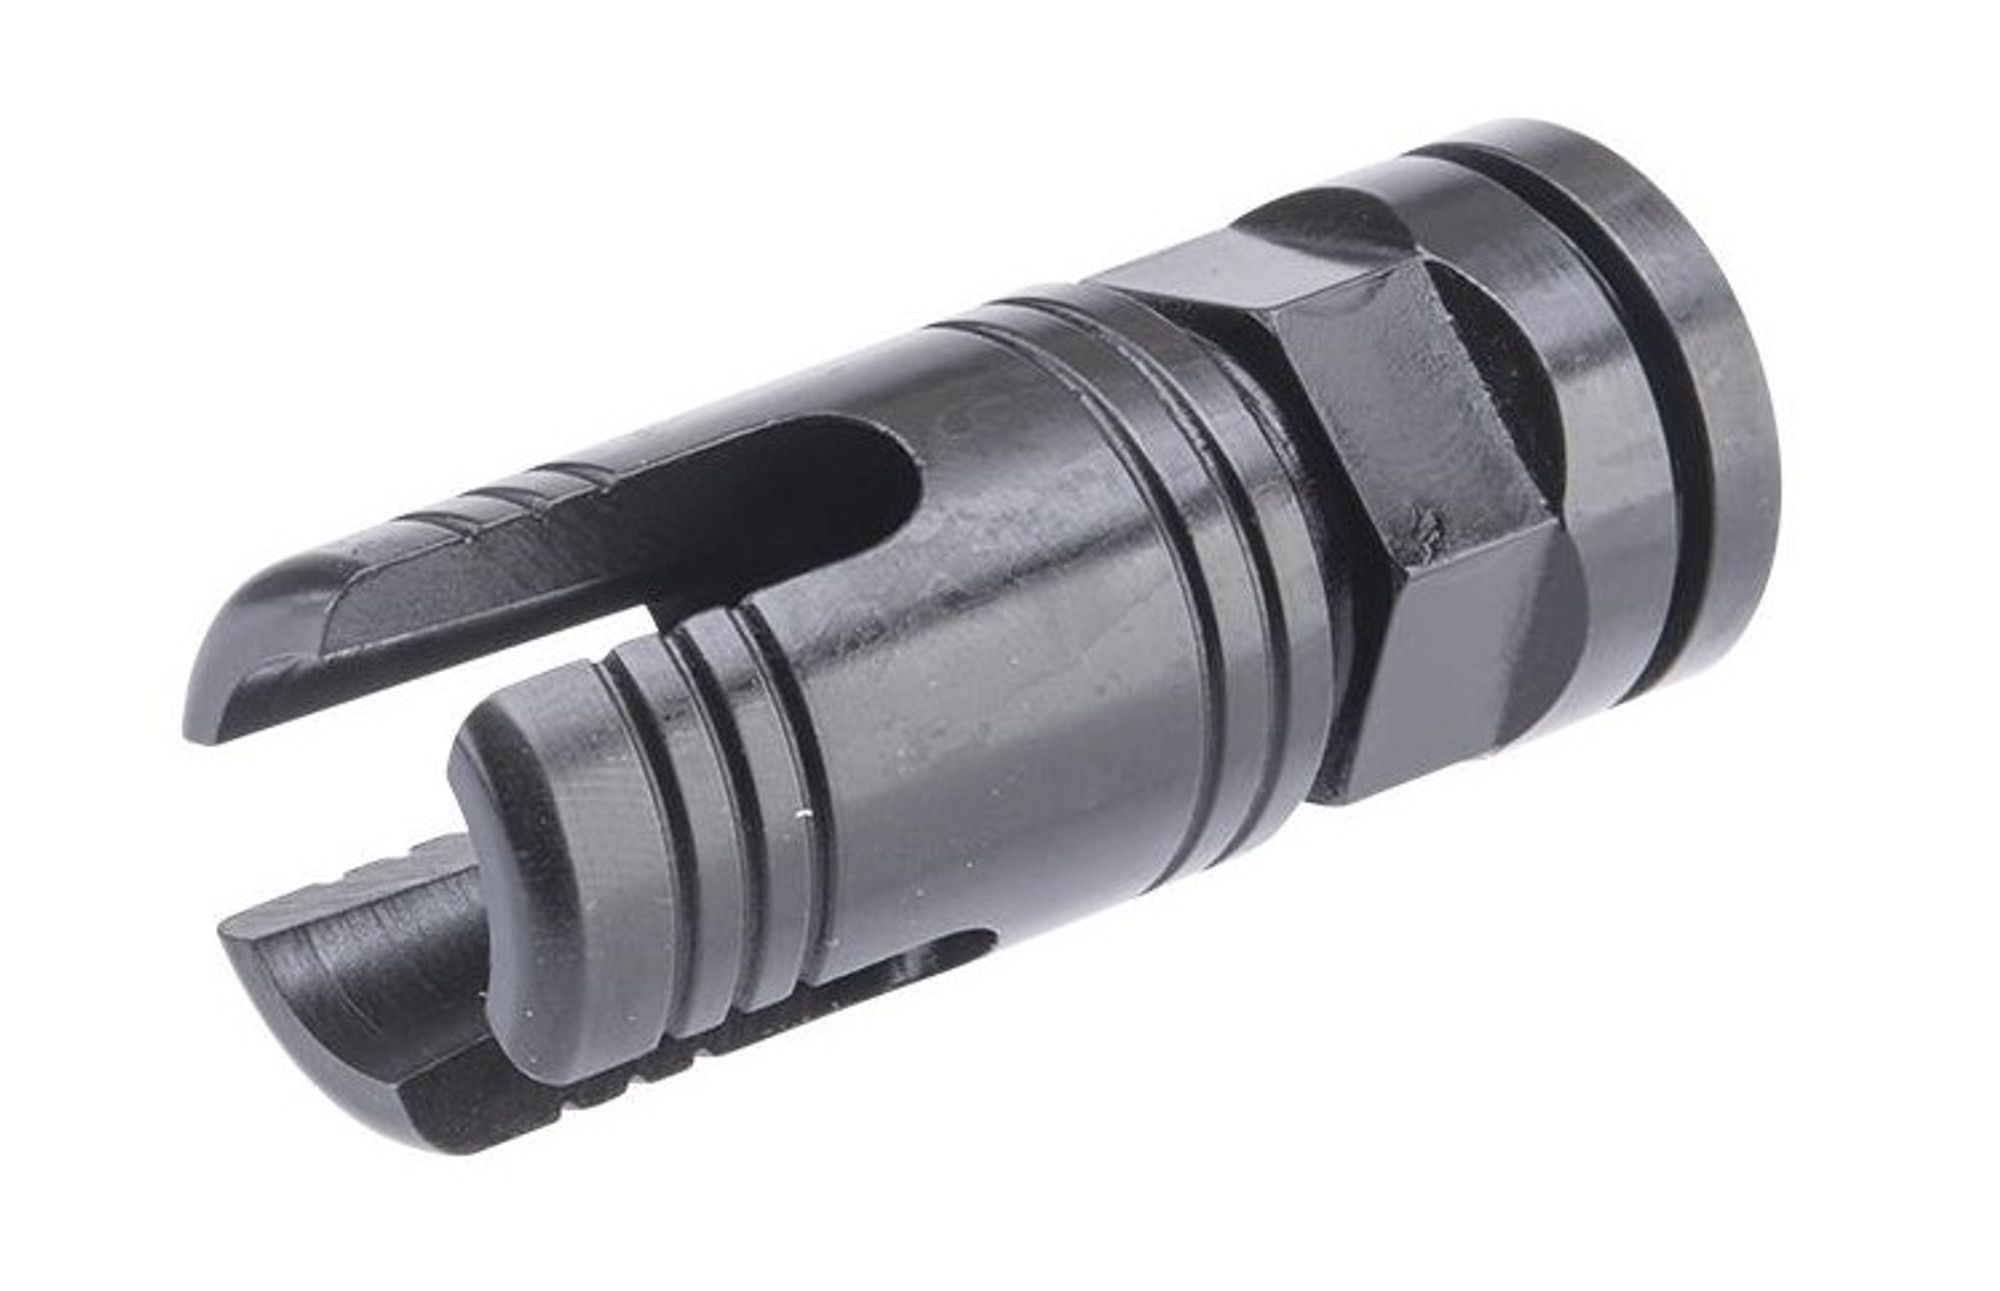 VFC 14mm Negative MK2 3-Prong Flash Hider - Short